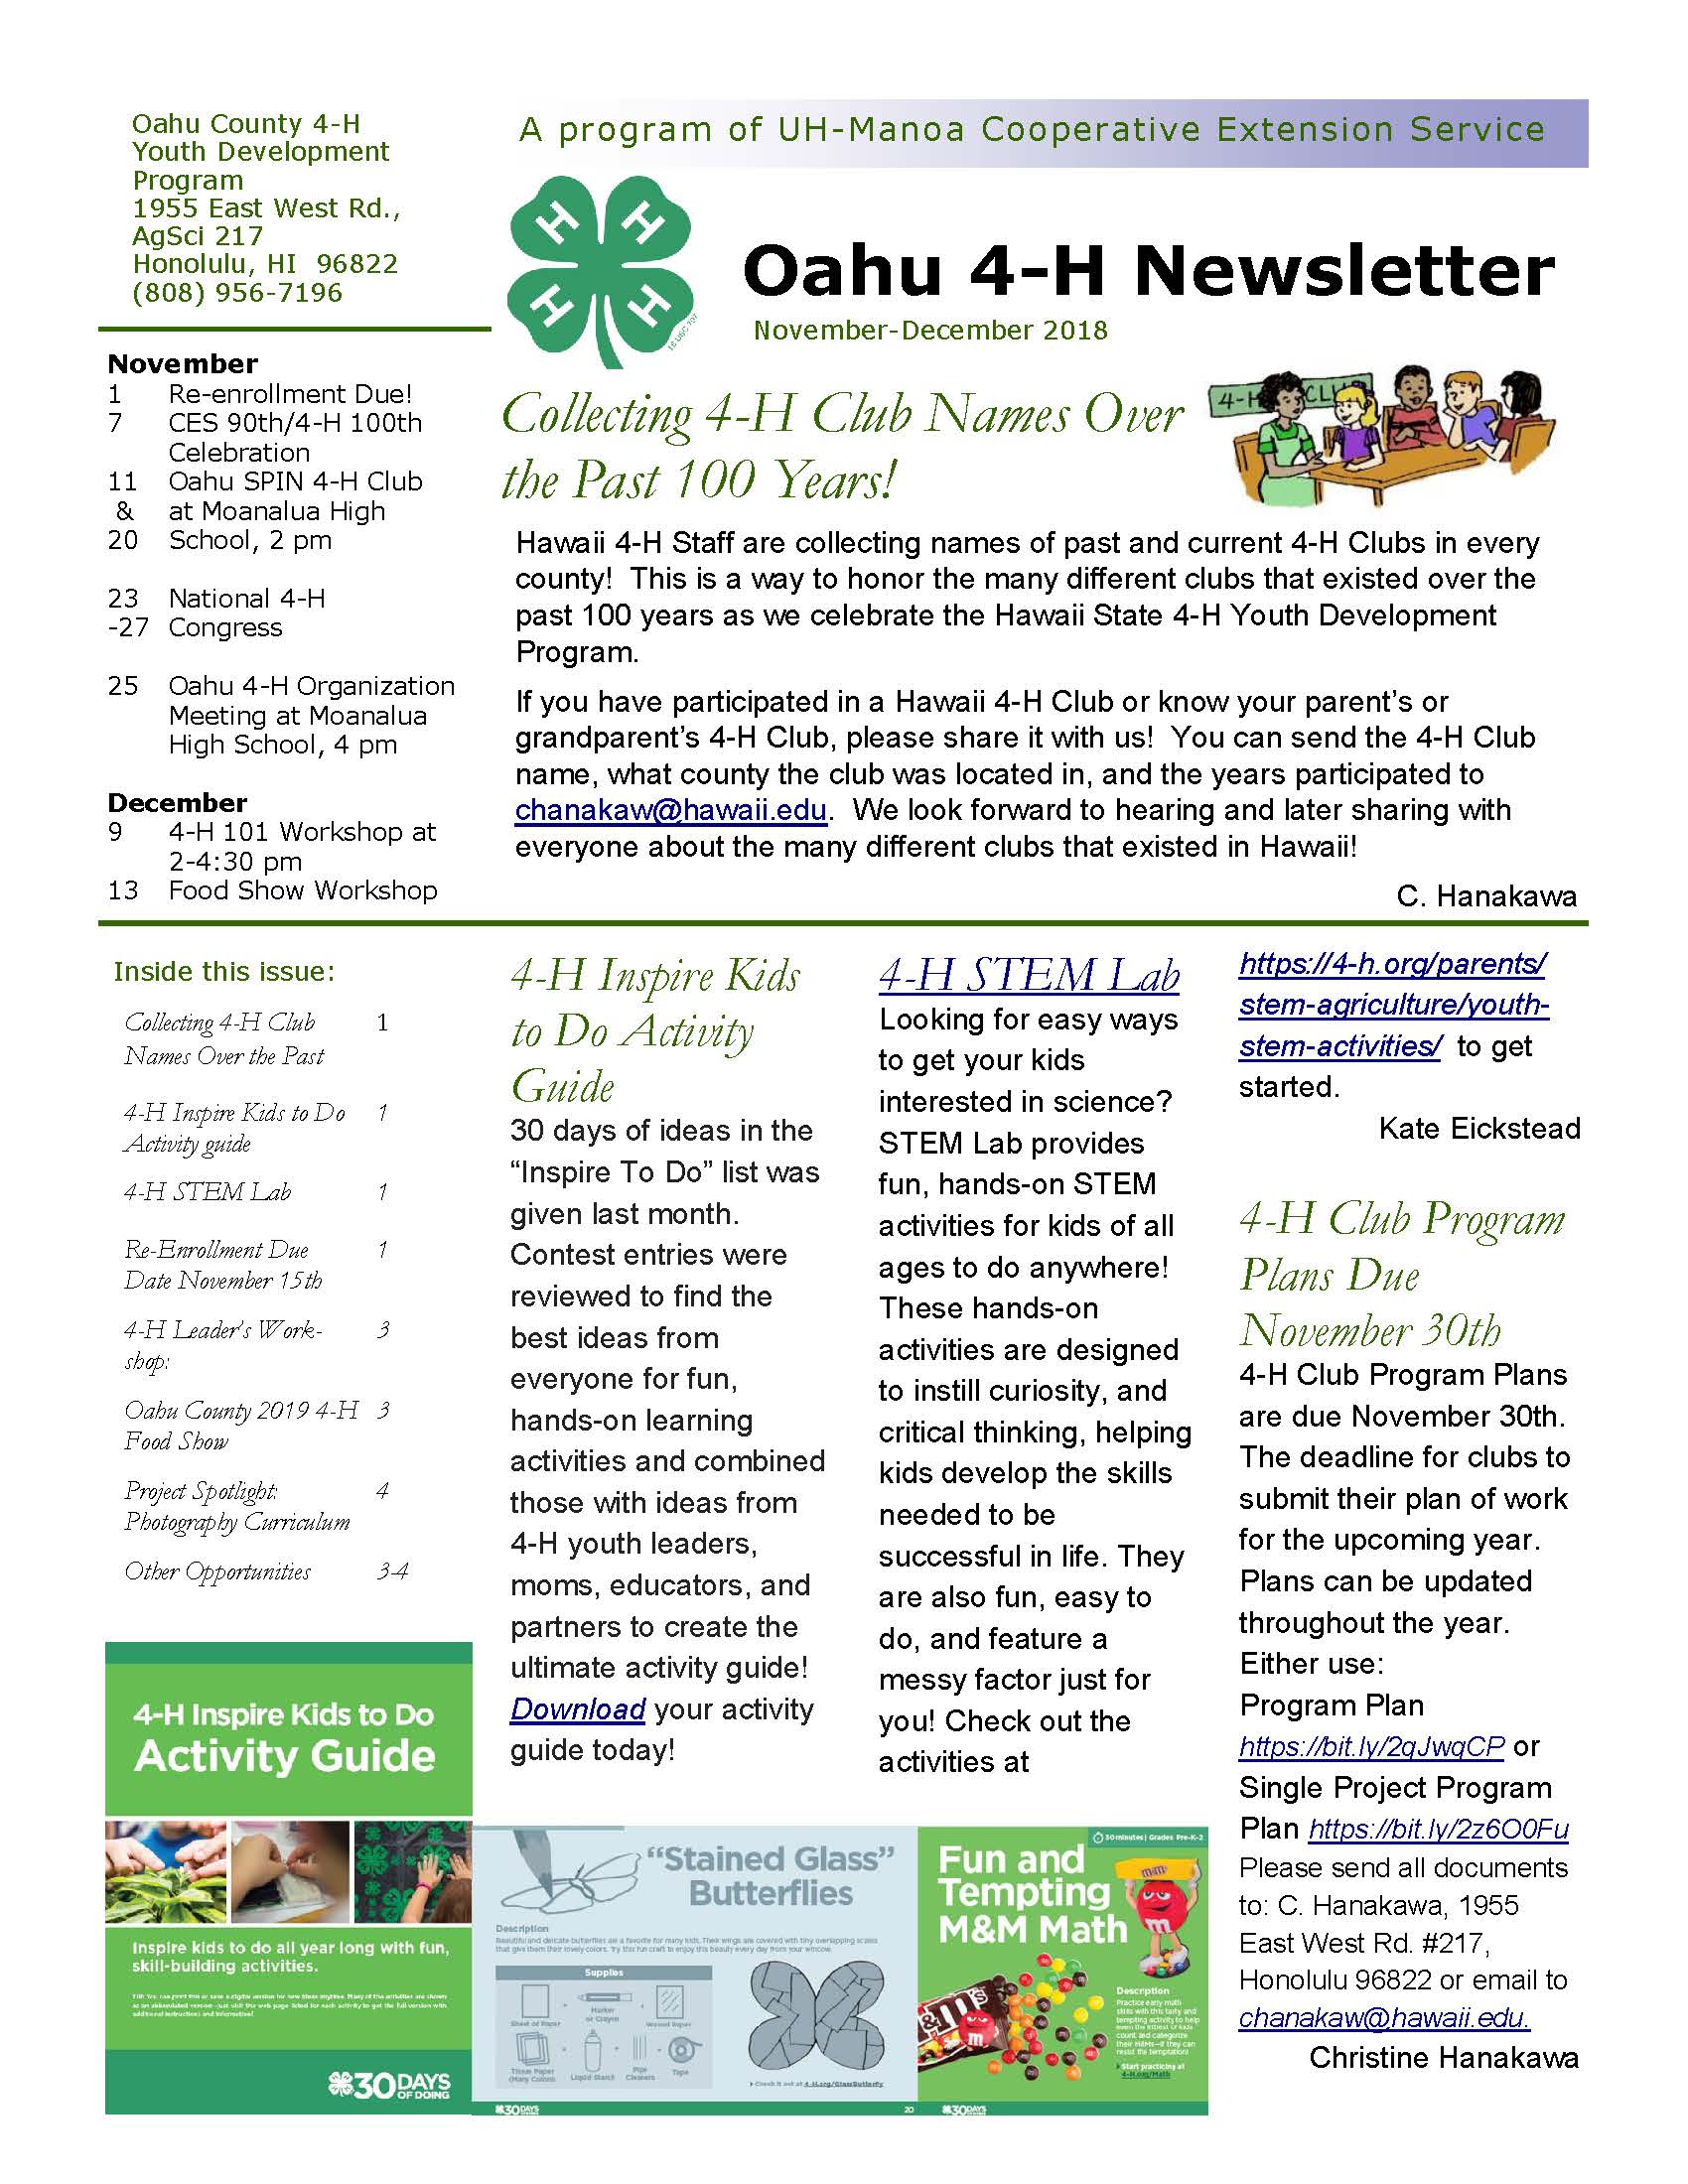 Oahu 4-H November 2018 Newsletter – Hawaii State 4-H Program